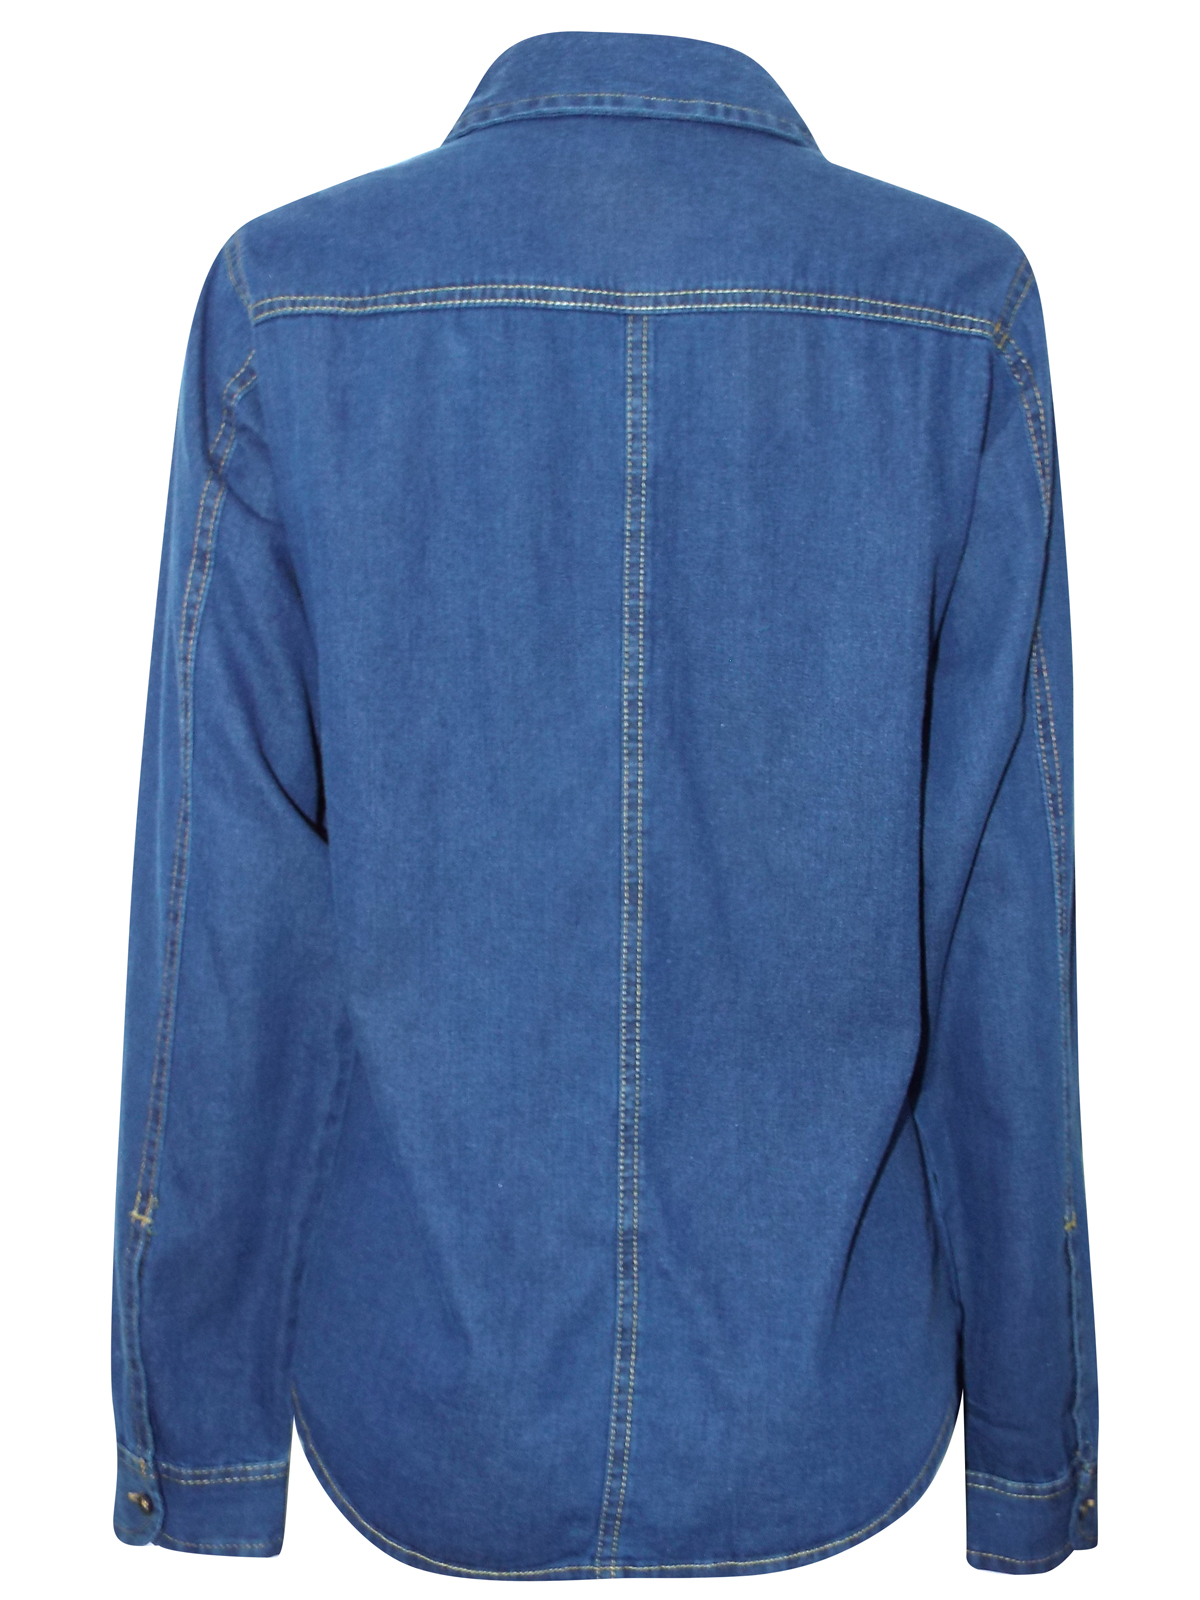 N3wL00k BLUE Long Sleeve Denim Shirt - Size 8 to 16